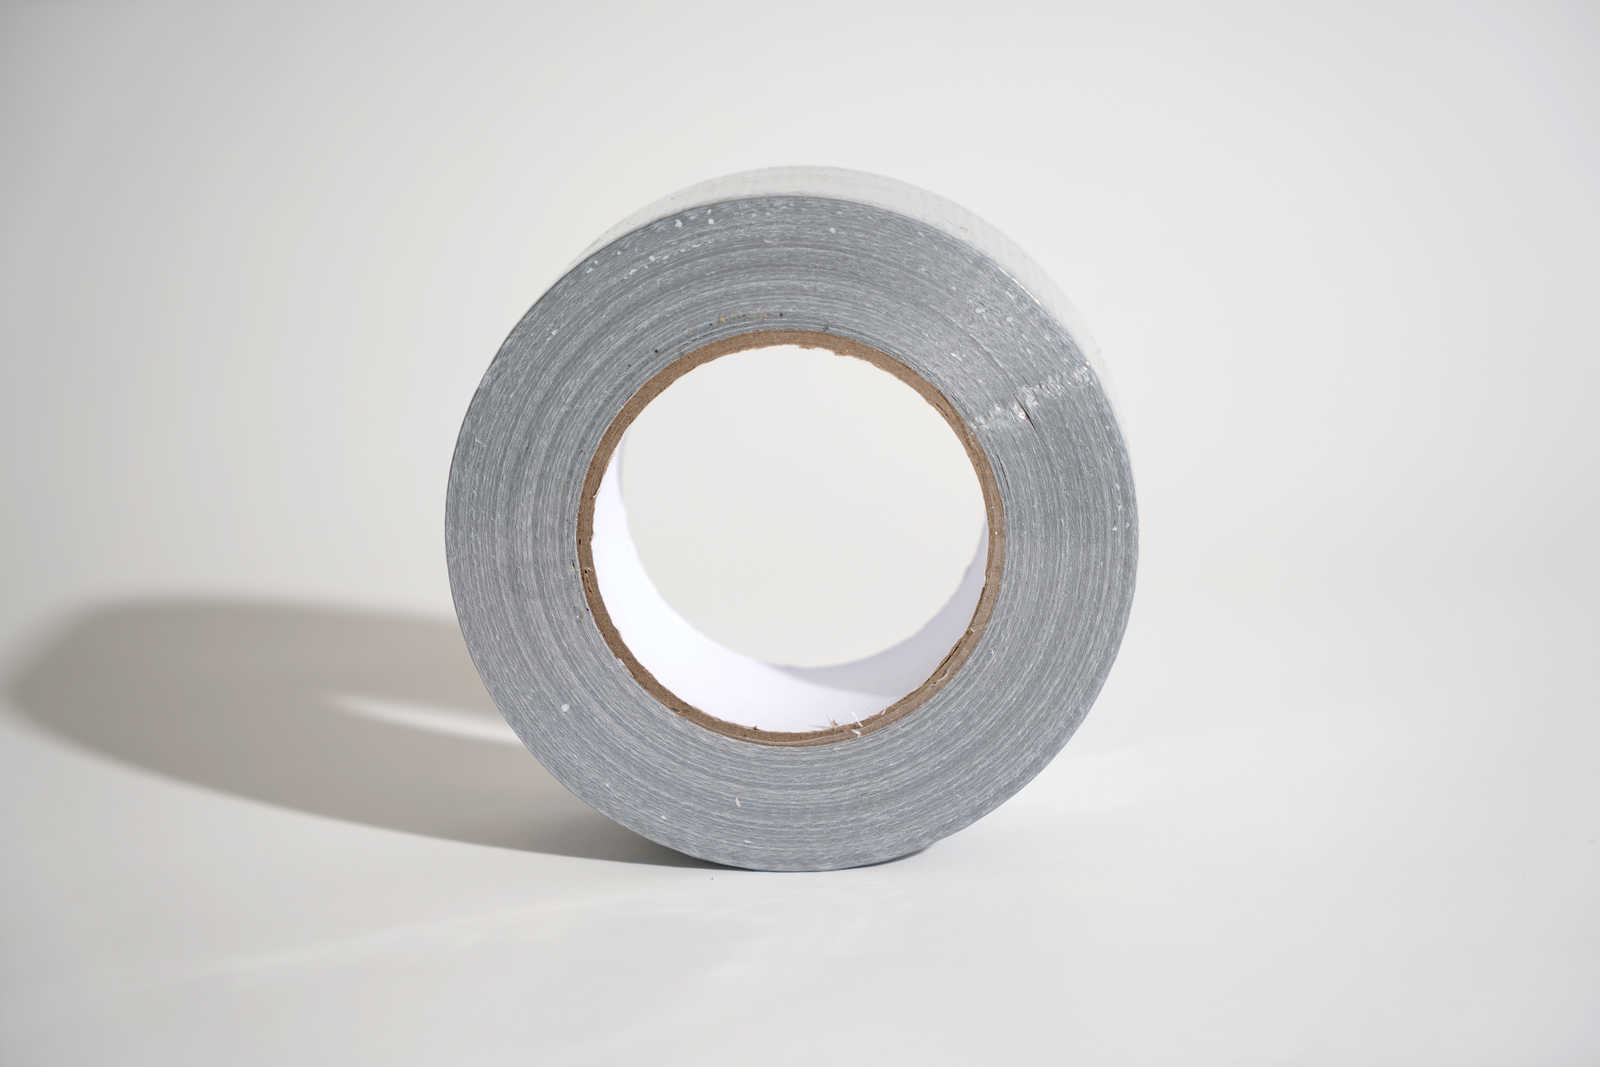             Armor tape 48mm x 50m, grey fabric tape
        